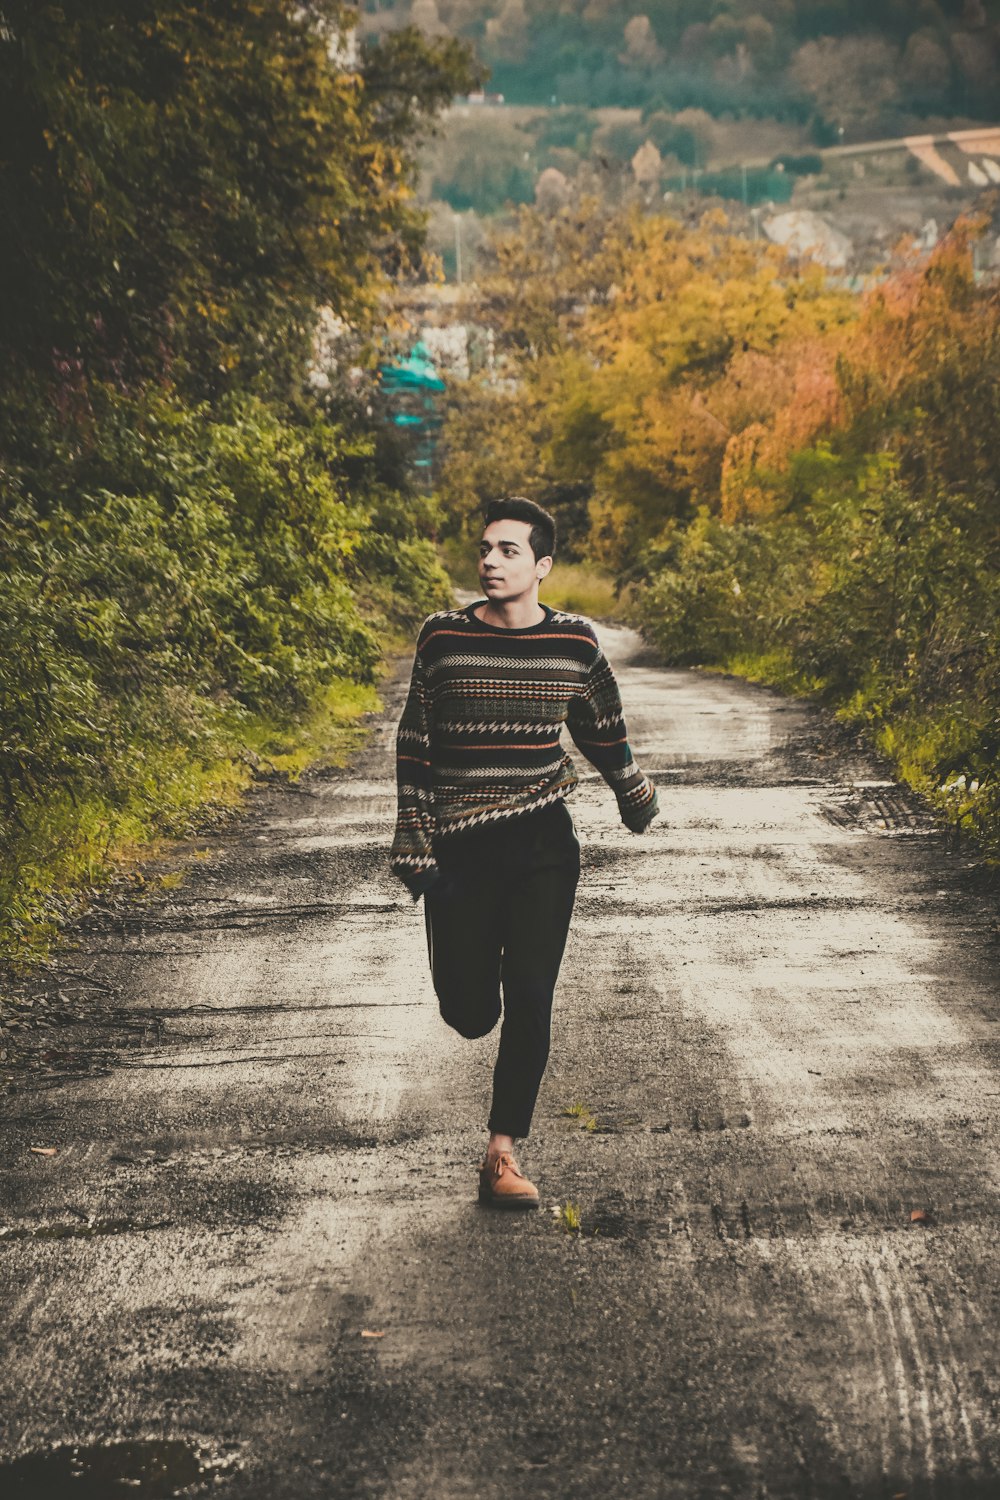 man wearing sweater running on road between trees during daytime